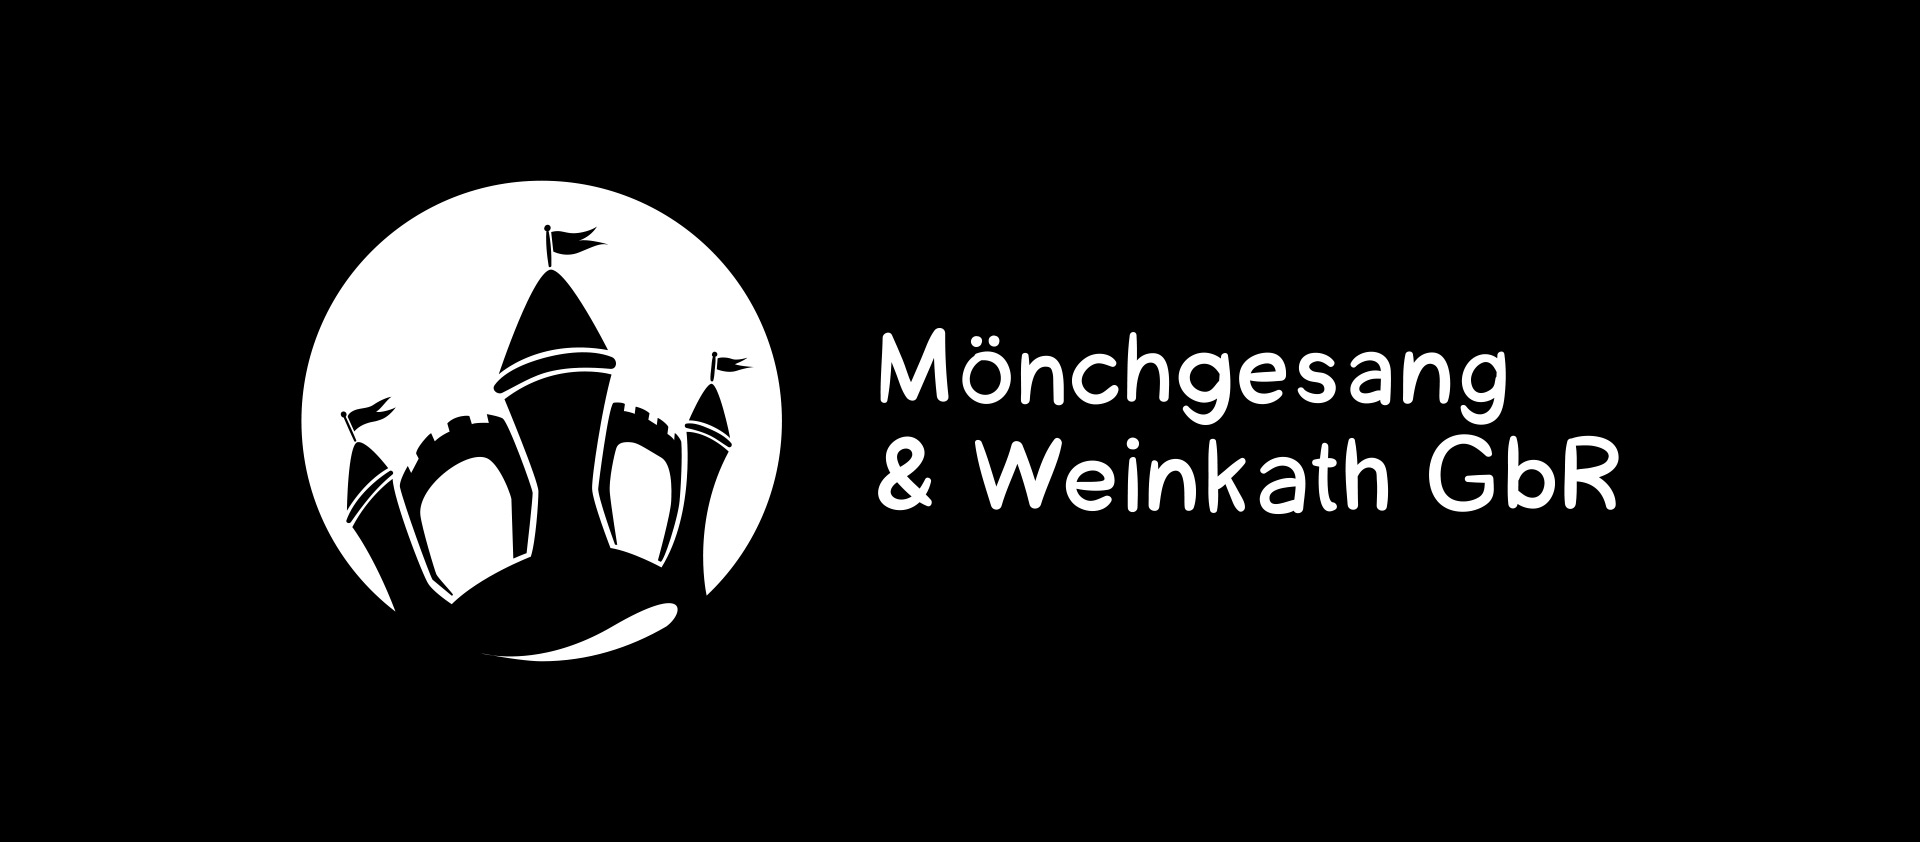 Logodesign "Mönchgesang & Weinkath Gbr""